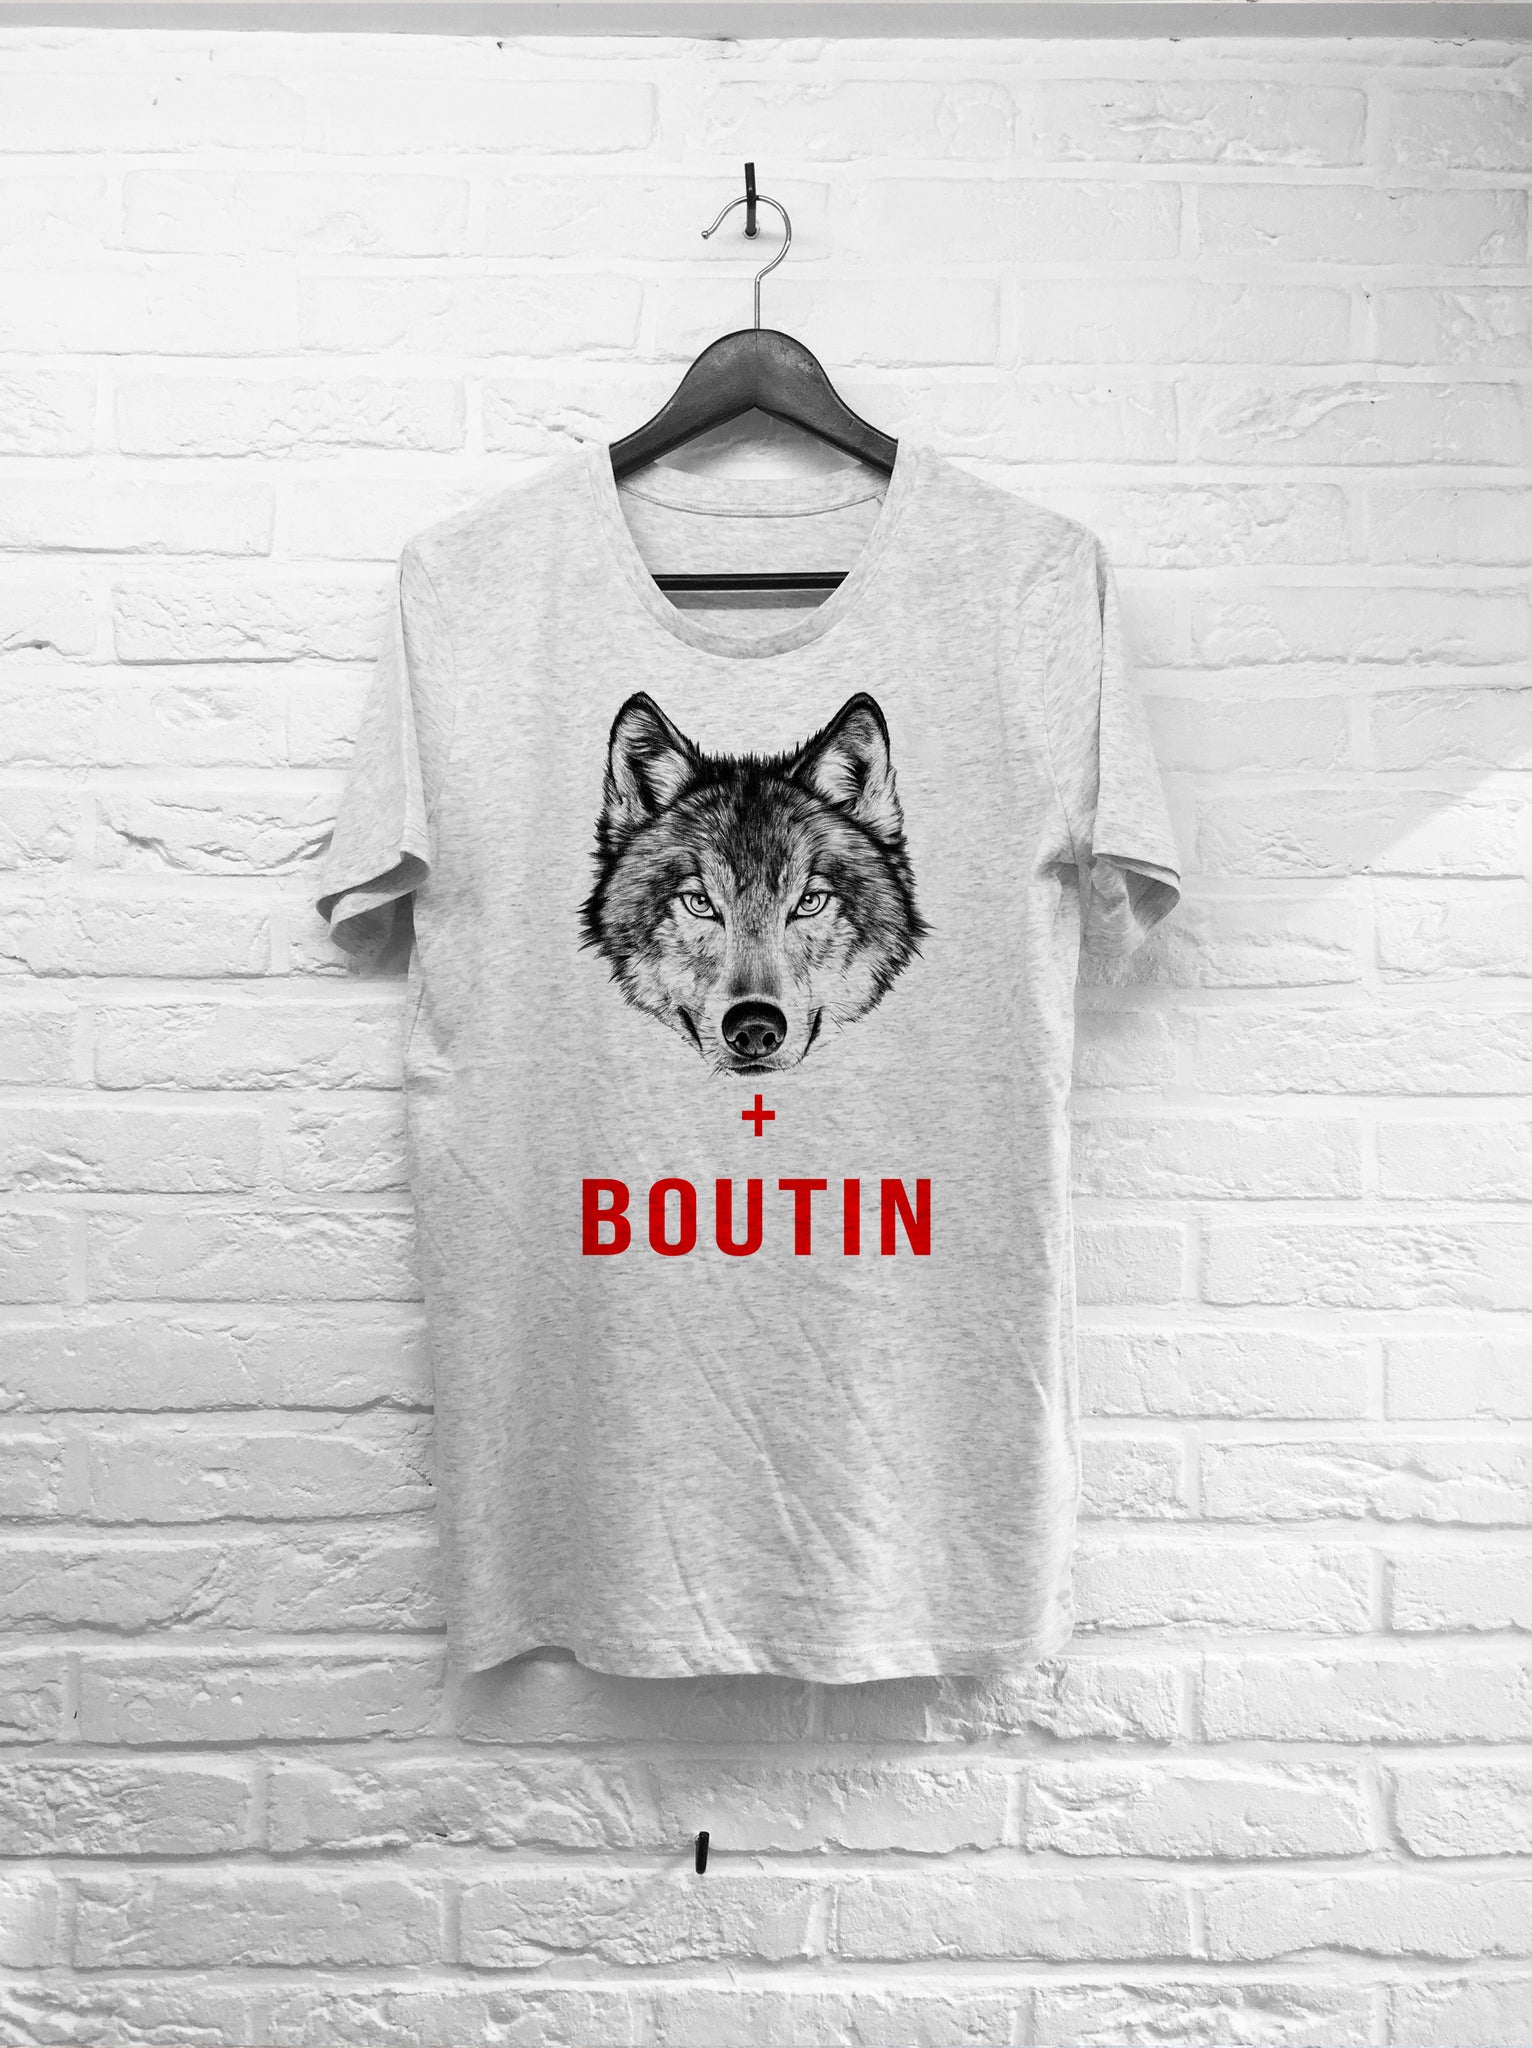 Loupboutin-T shirt-Atelier Amelot